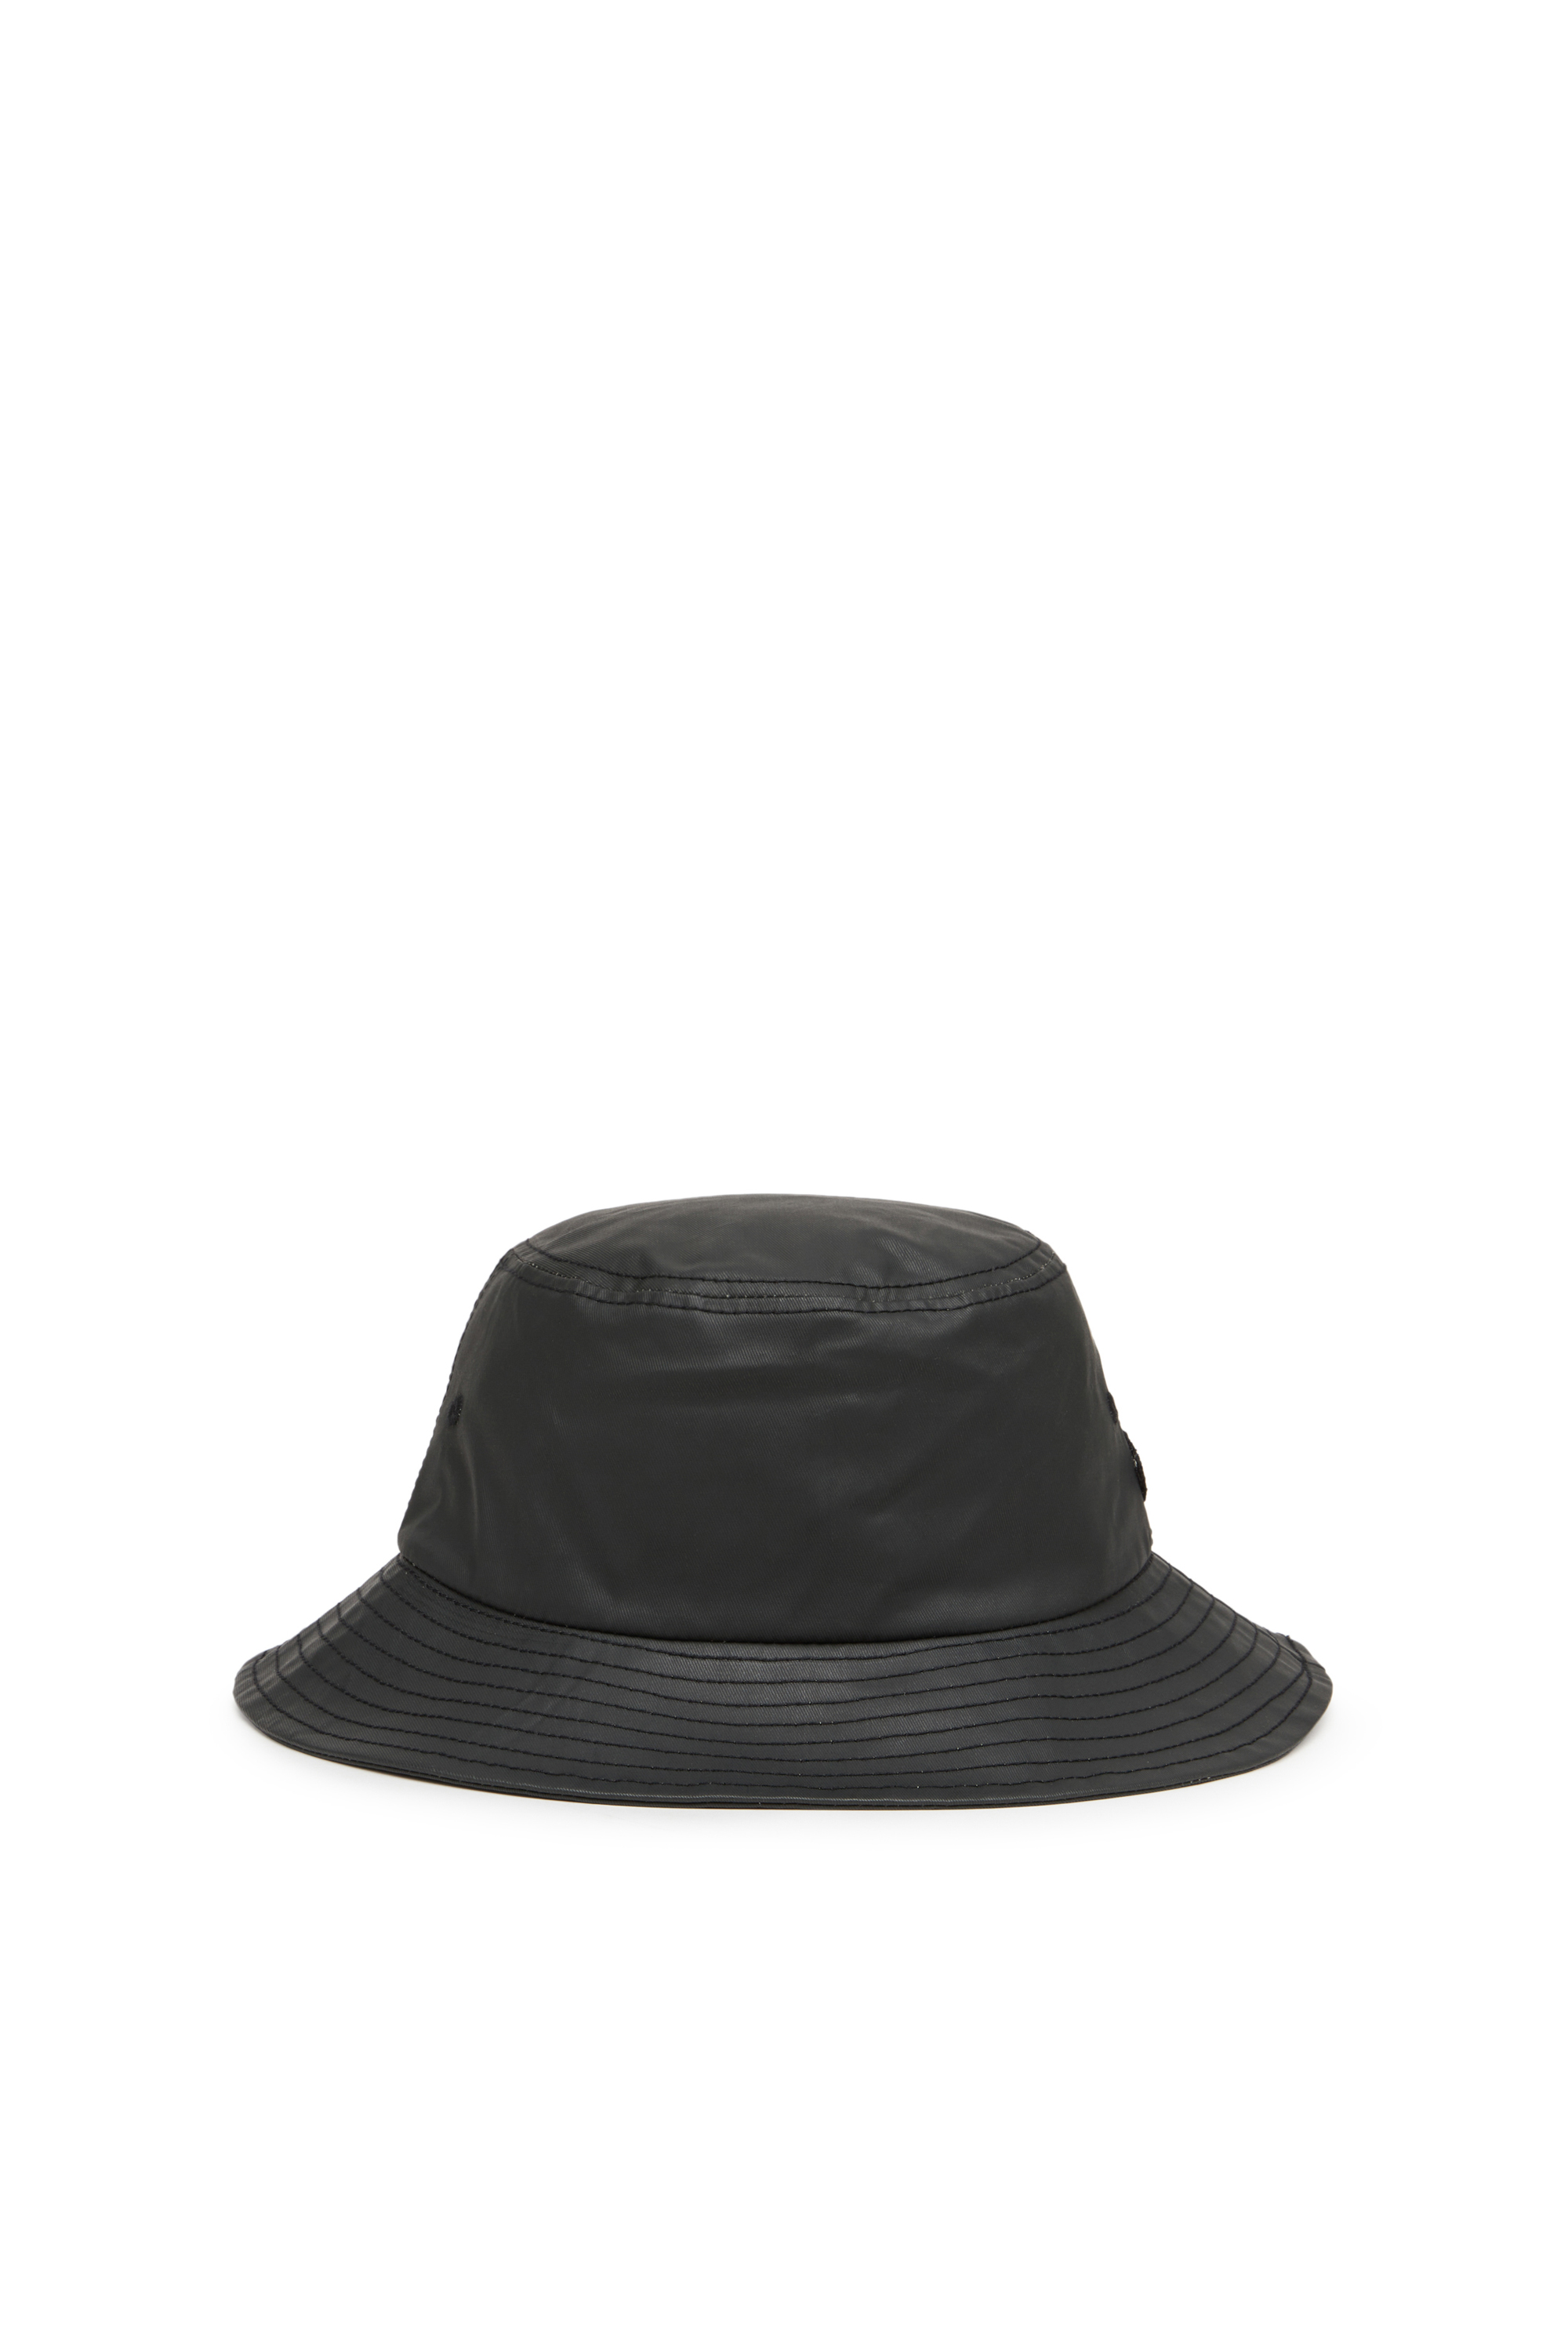 Men's bucket hat built from cotton twill